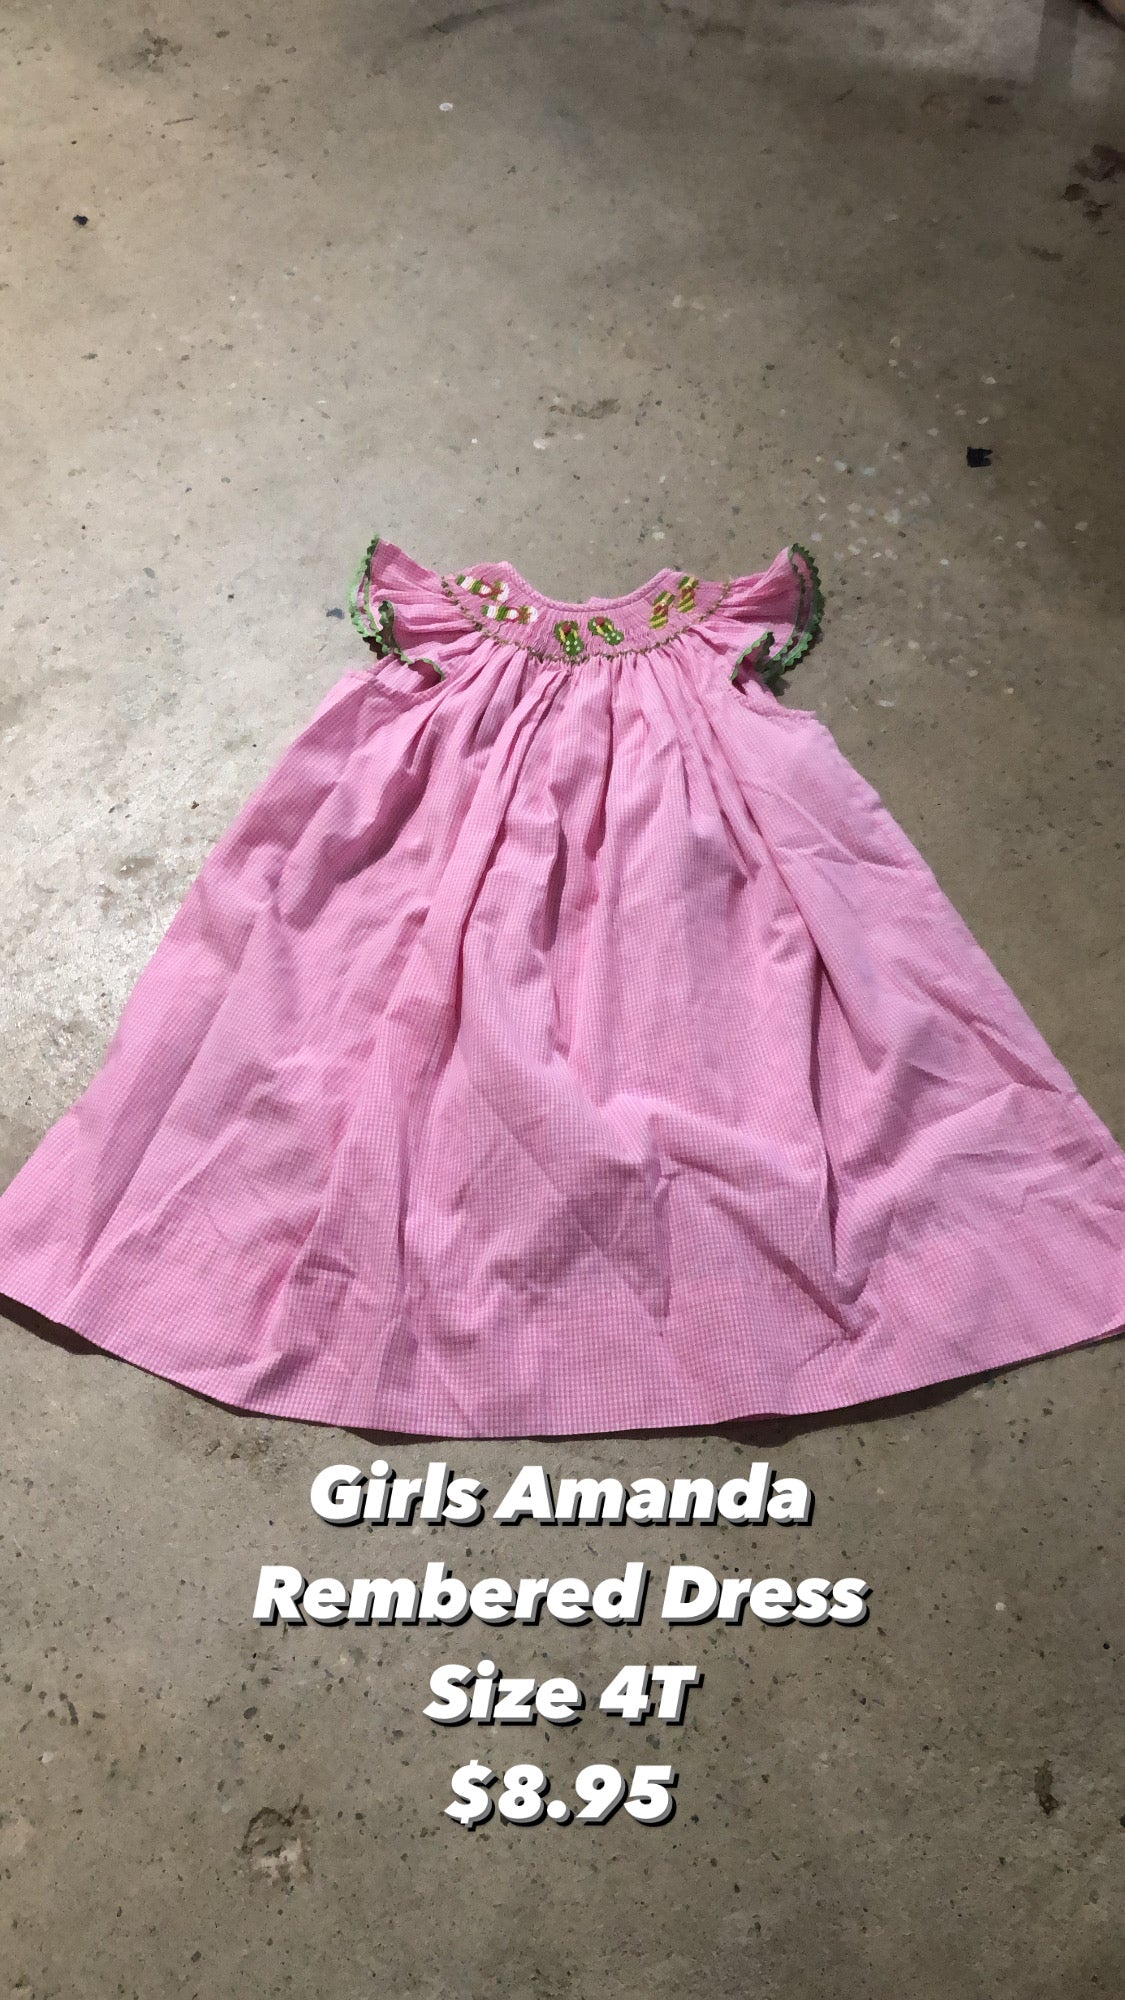 Girls Amanda Remberence Dress